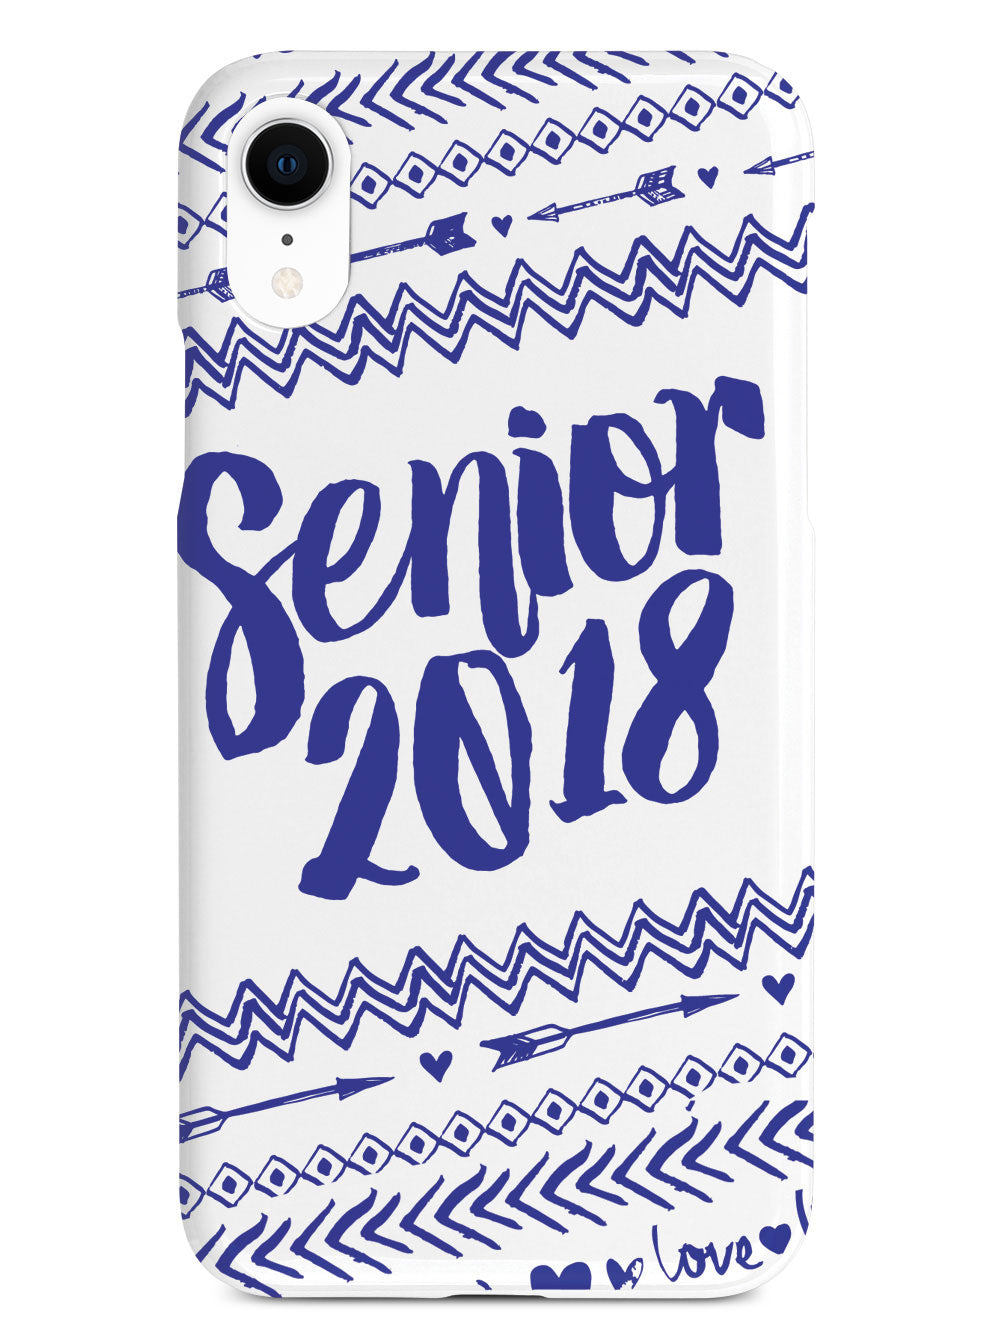 Senior 2018 - Blue Case